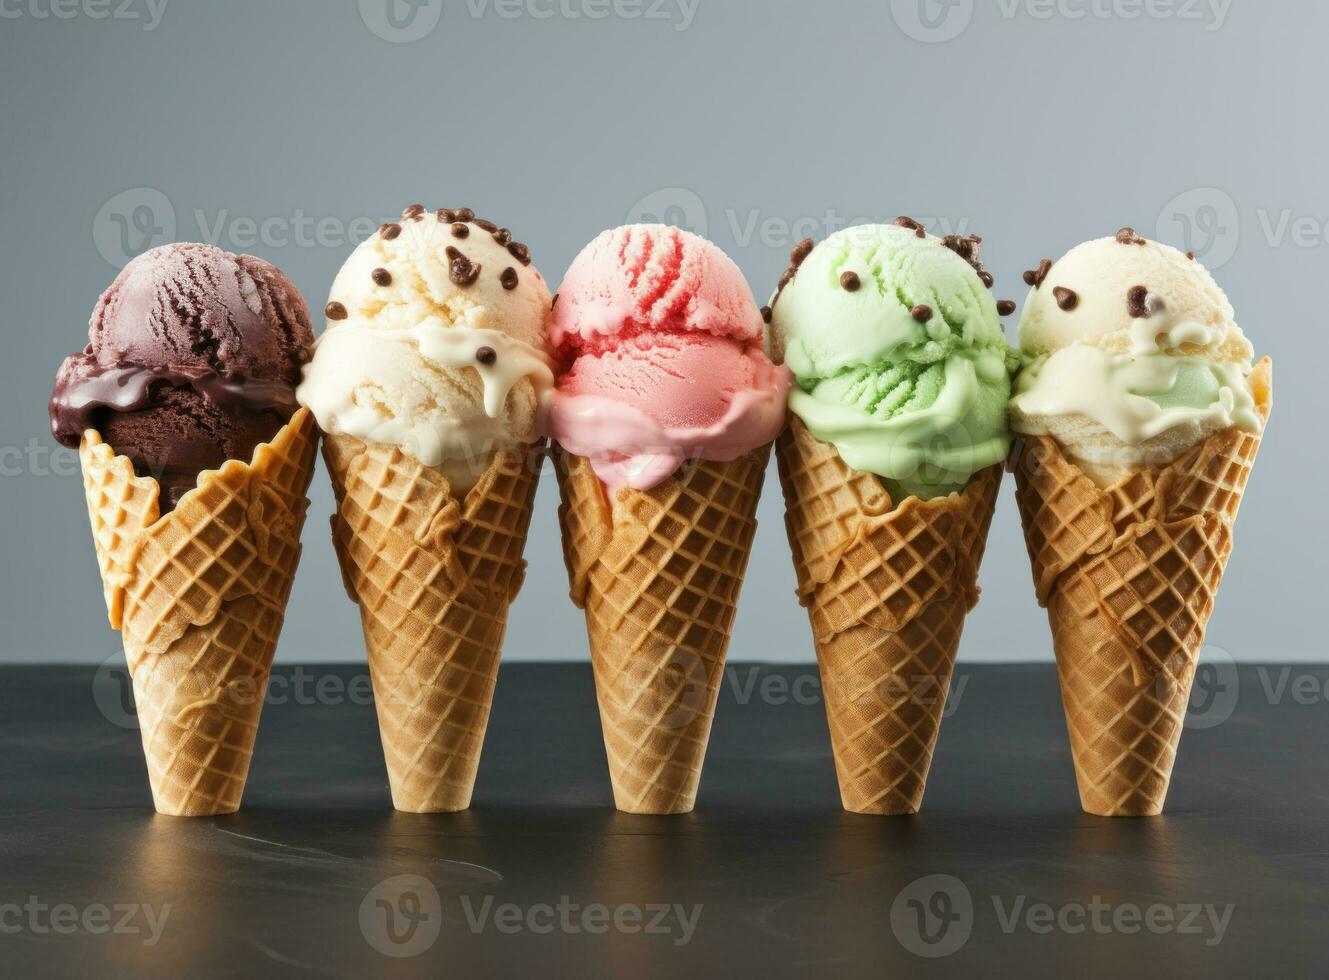 ice cream cones with mixed flavors photo